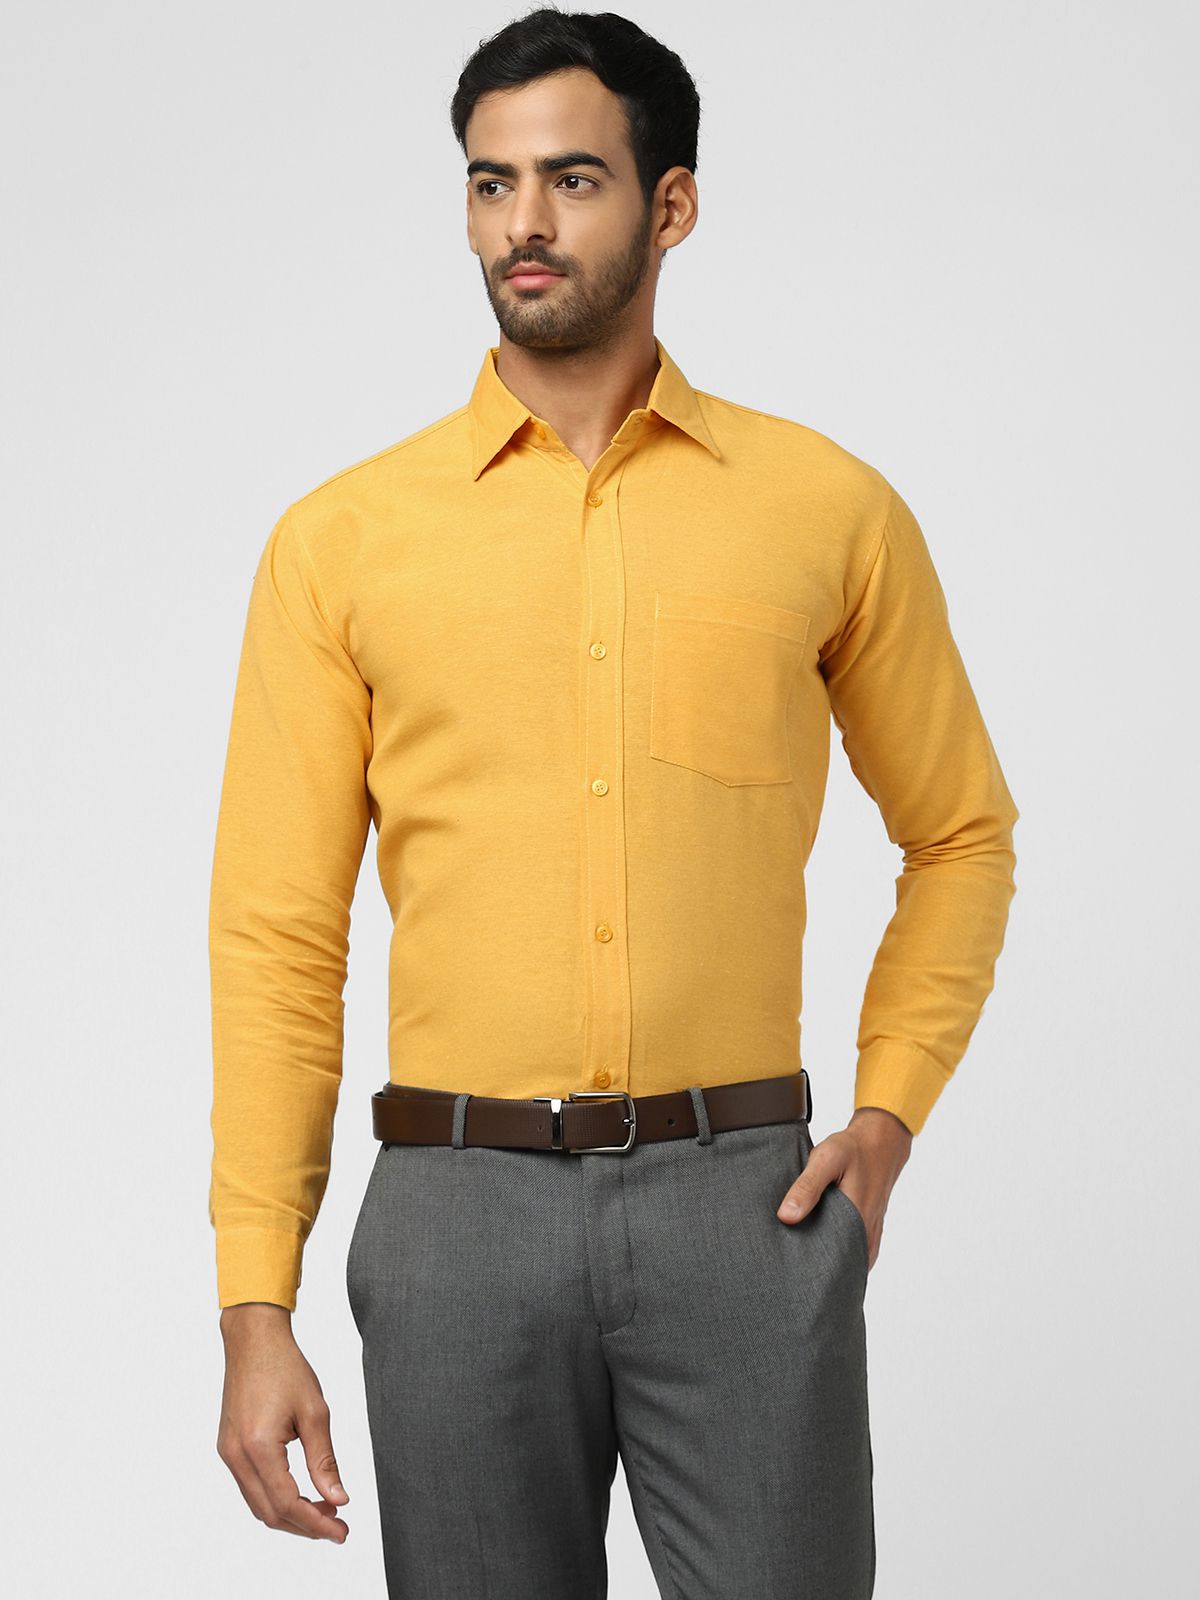 DESHBANDHU DBK - Yellow Cotton Regular Fit Men's Casual Shirt (Pack of 1 )